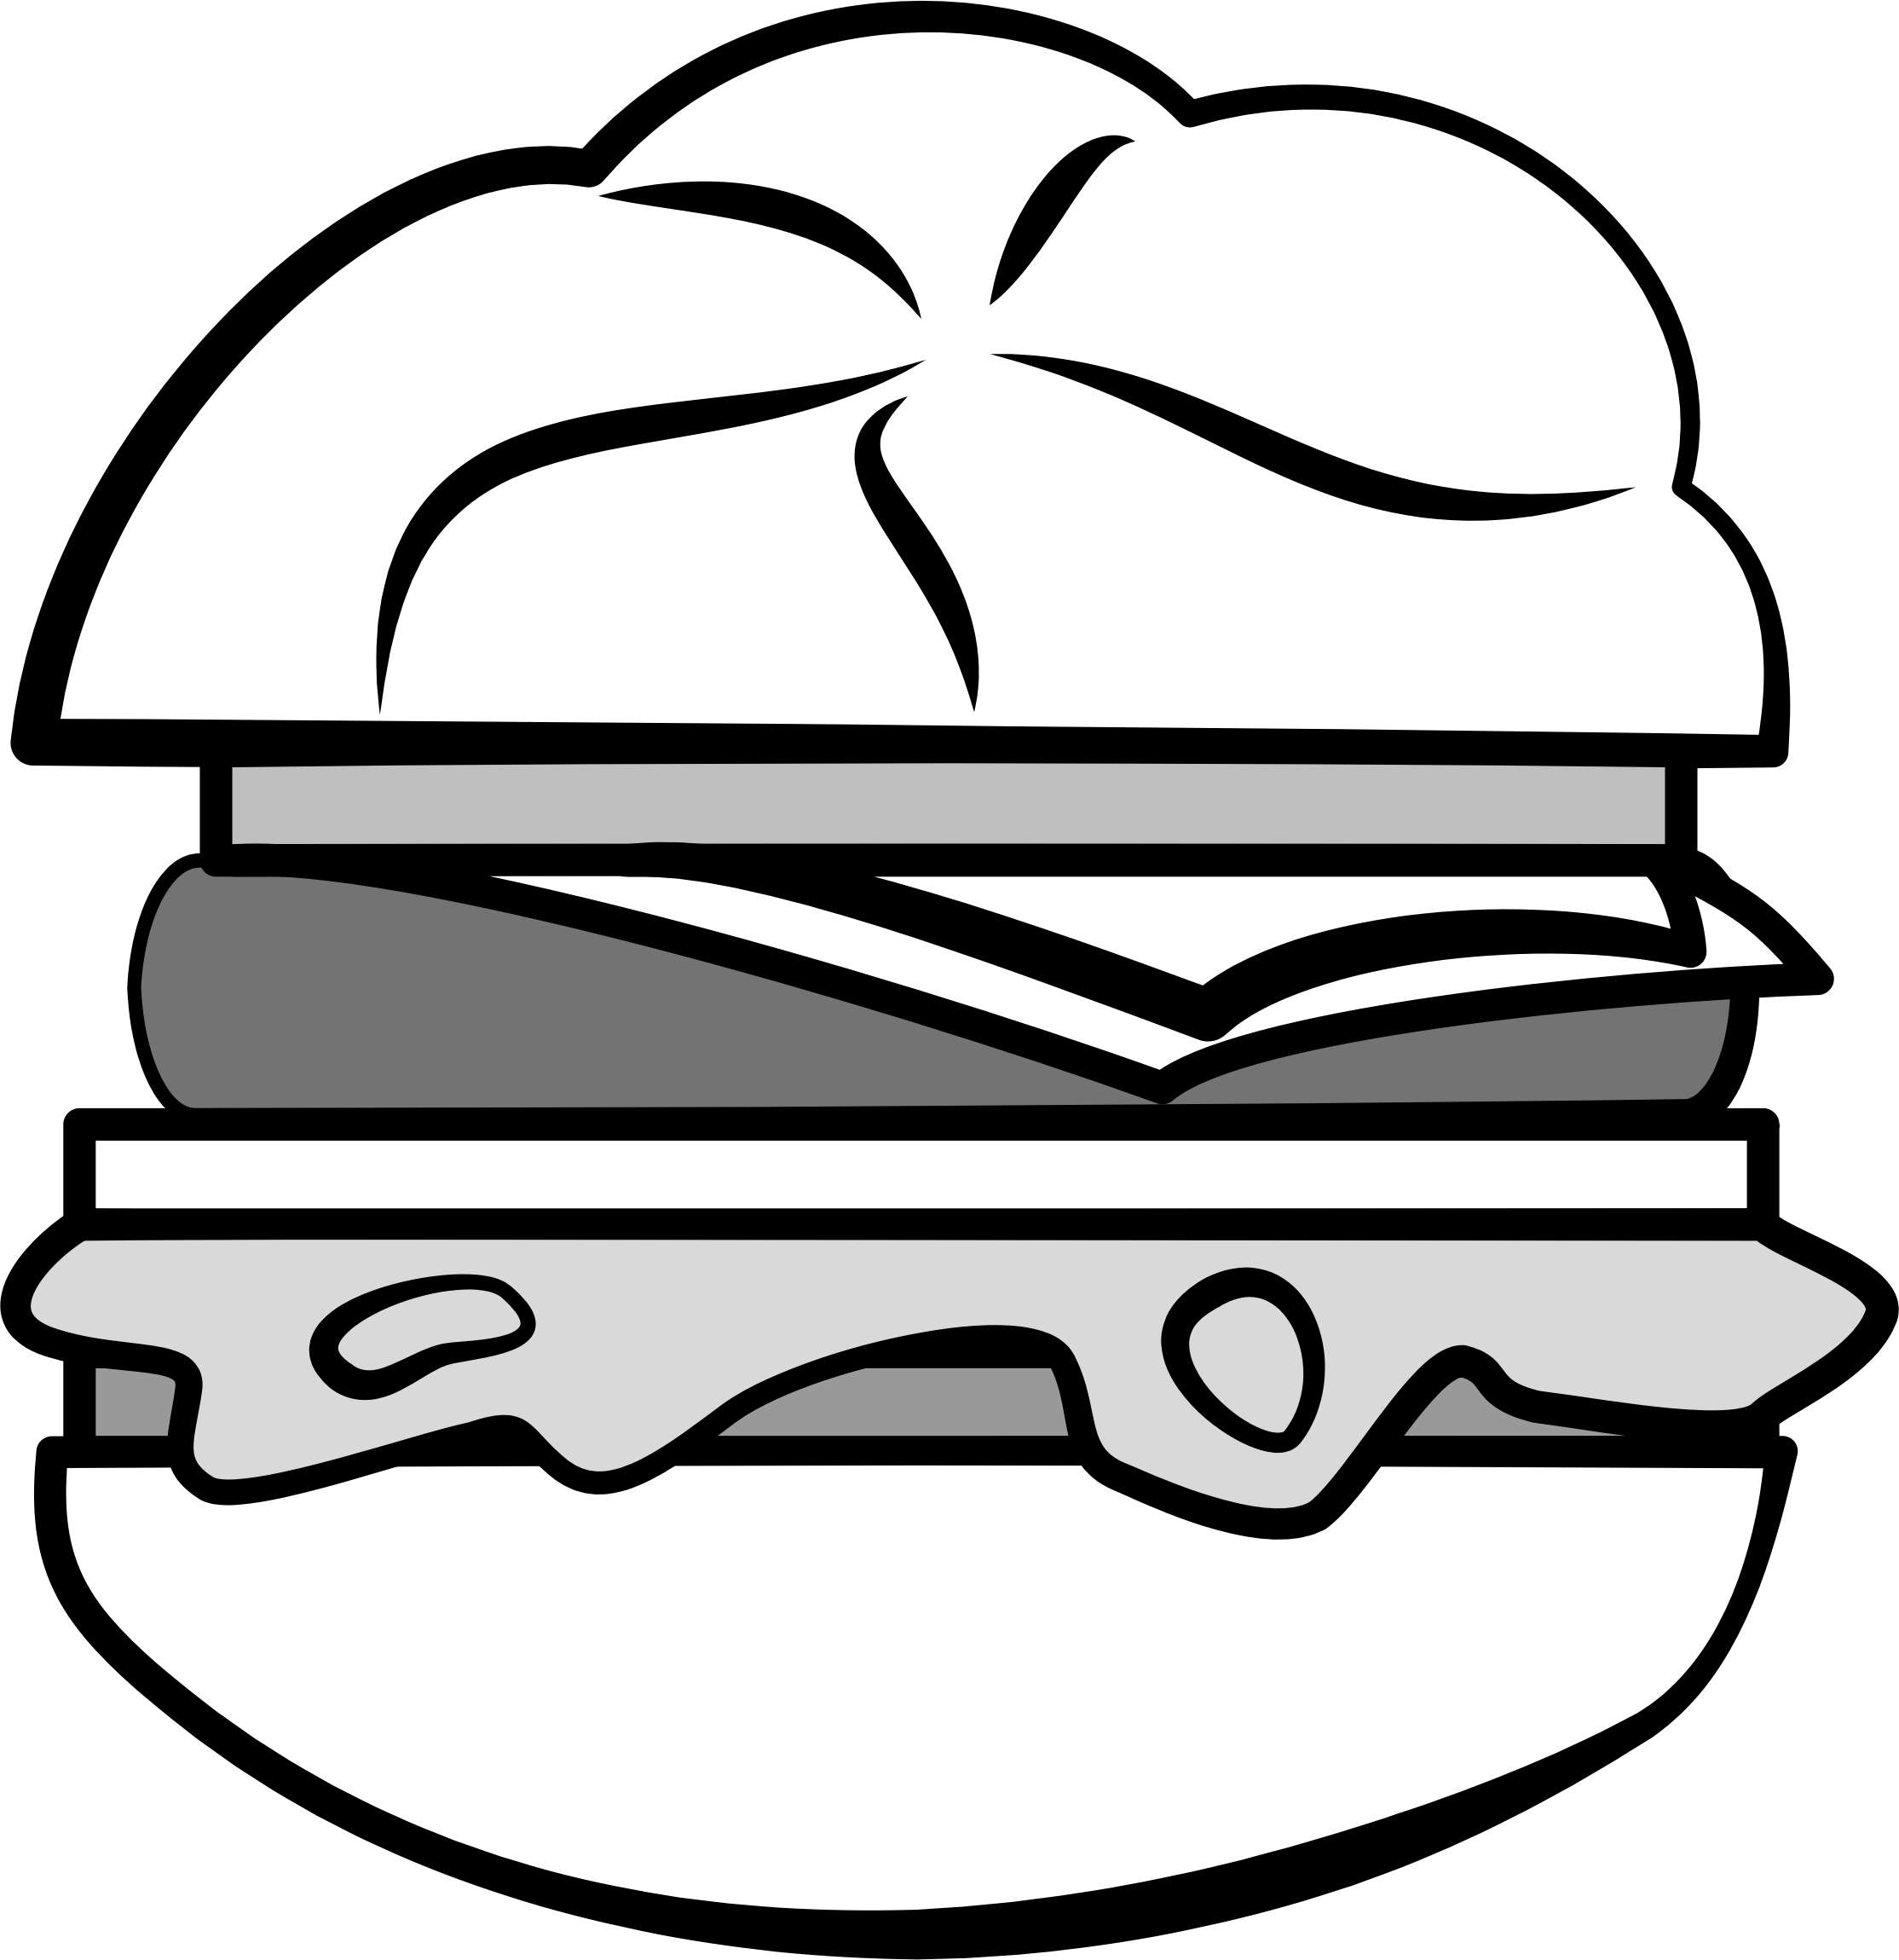 burger black and white. banner vector. basketball net vector. burger and fr...